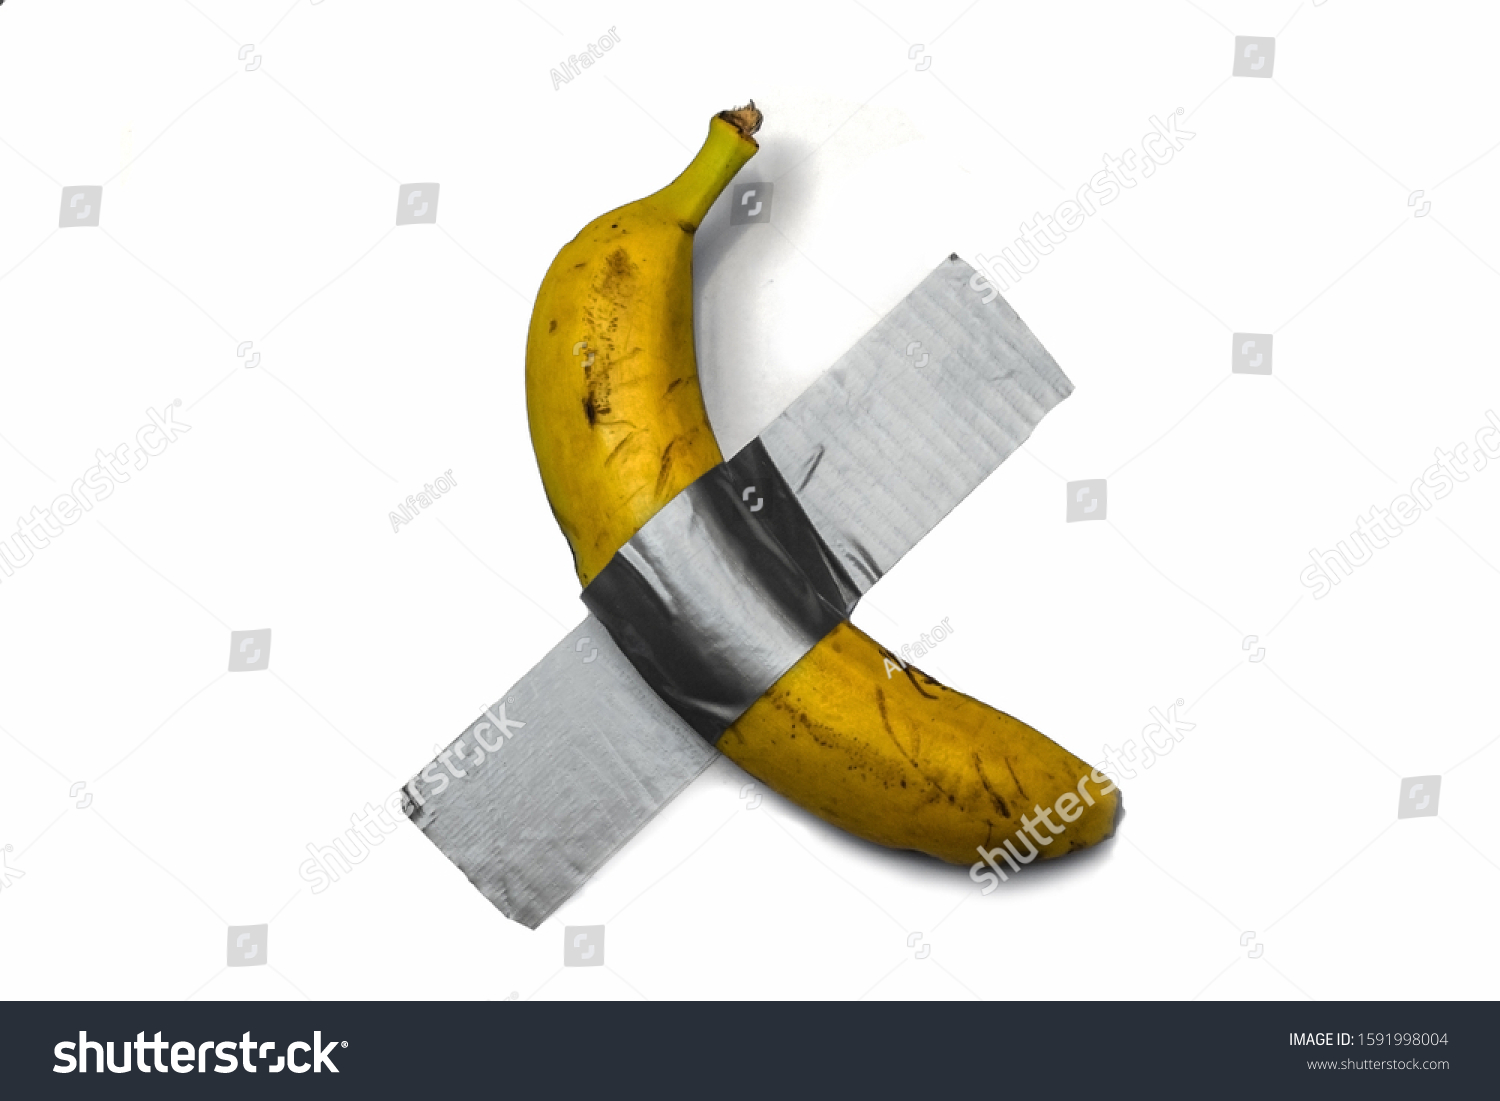 597 Banana exhibition Images, Stock Photos & Vectors | Shutterstock